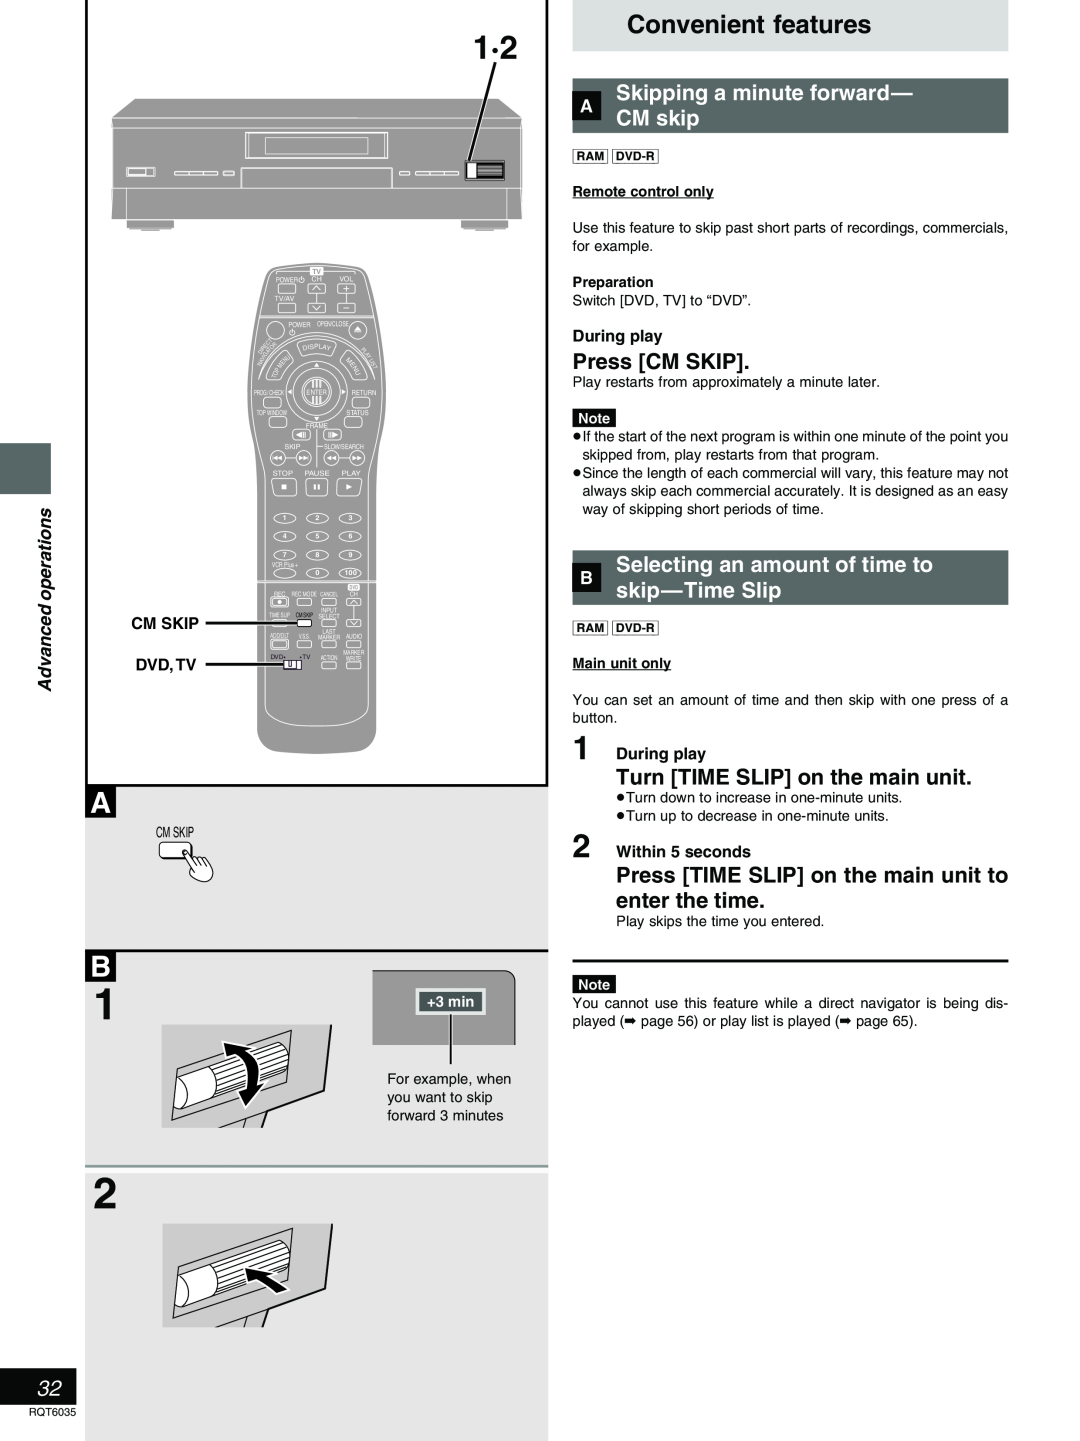 Panasonic DMR-E20 Convenient features, » Skipping a minute forward, CM skip, Press CM SKIP, skip-Time Slip, Cm Skip 